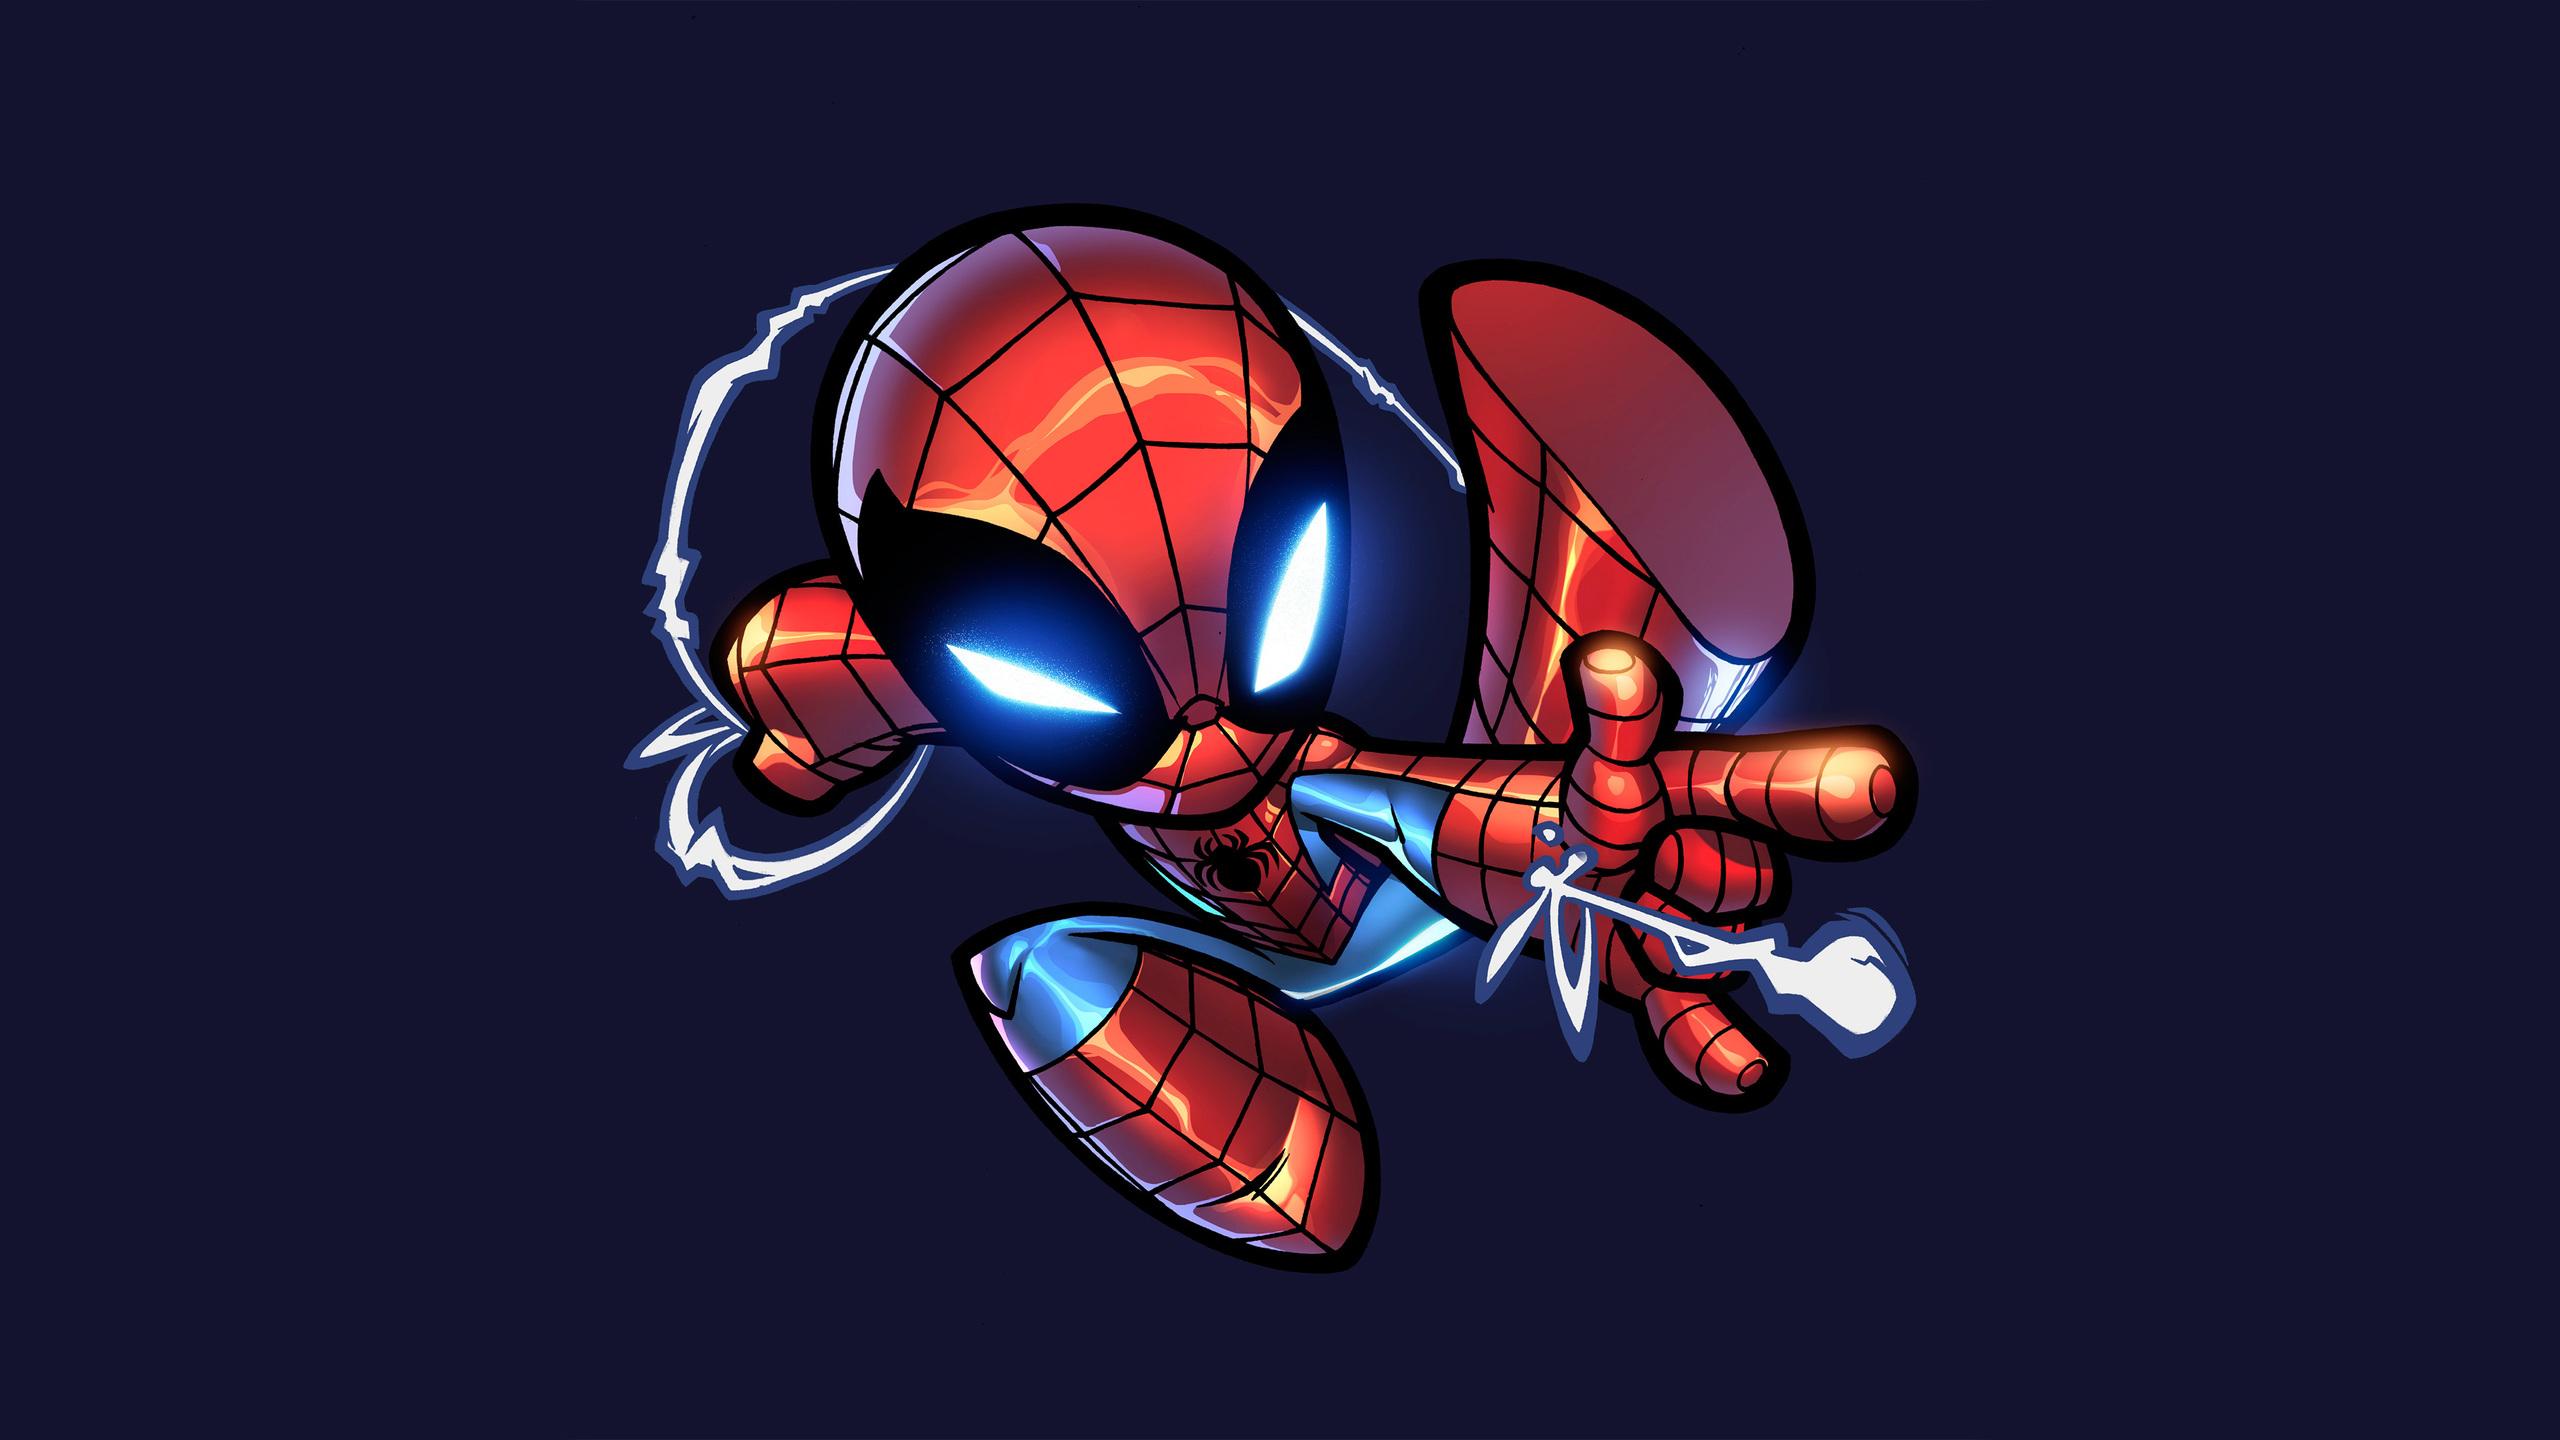 Spiderman - Fantasy & Abstract Background Wallpapers on Desktop Nexus  (Image 2394115)